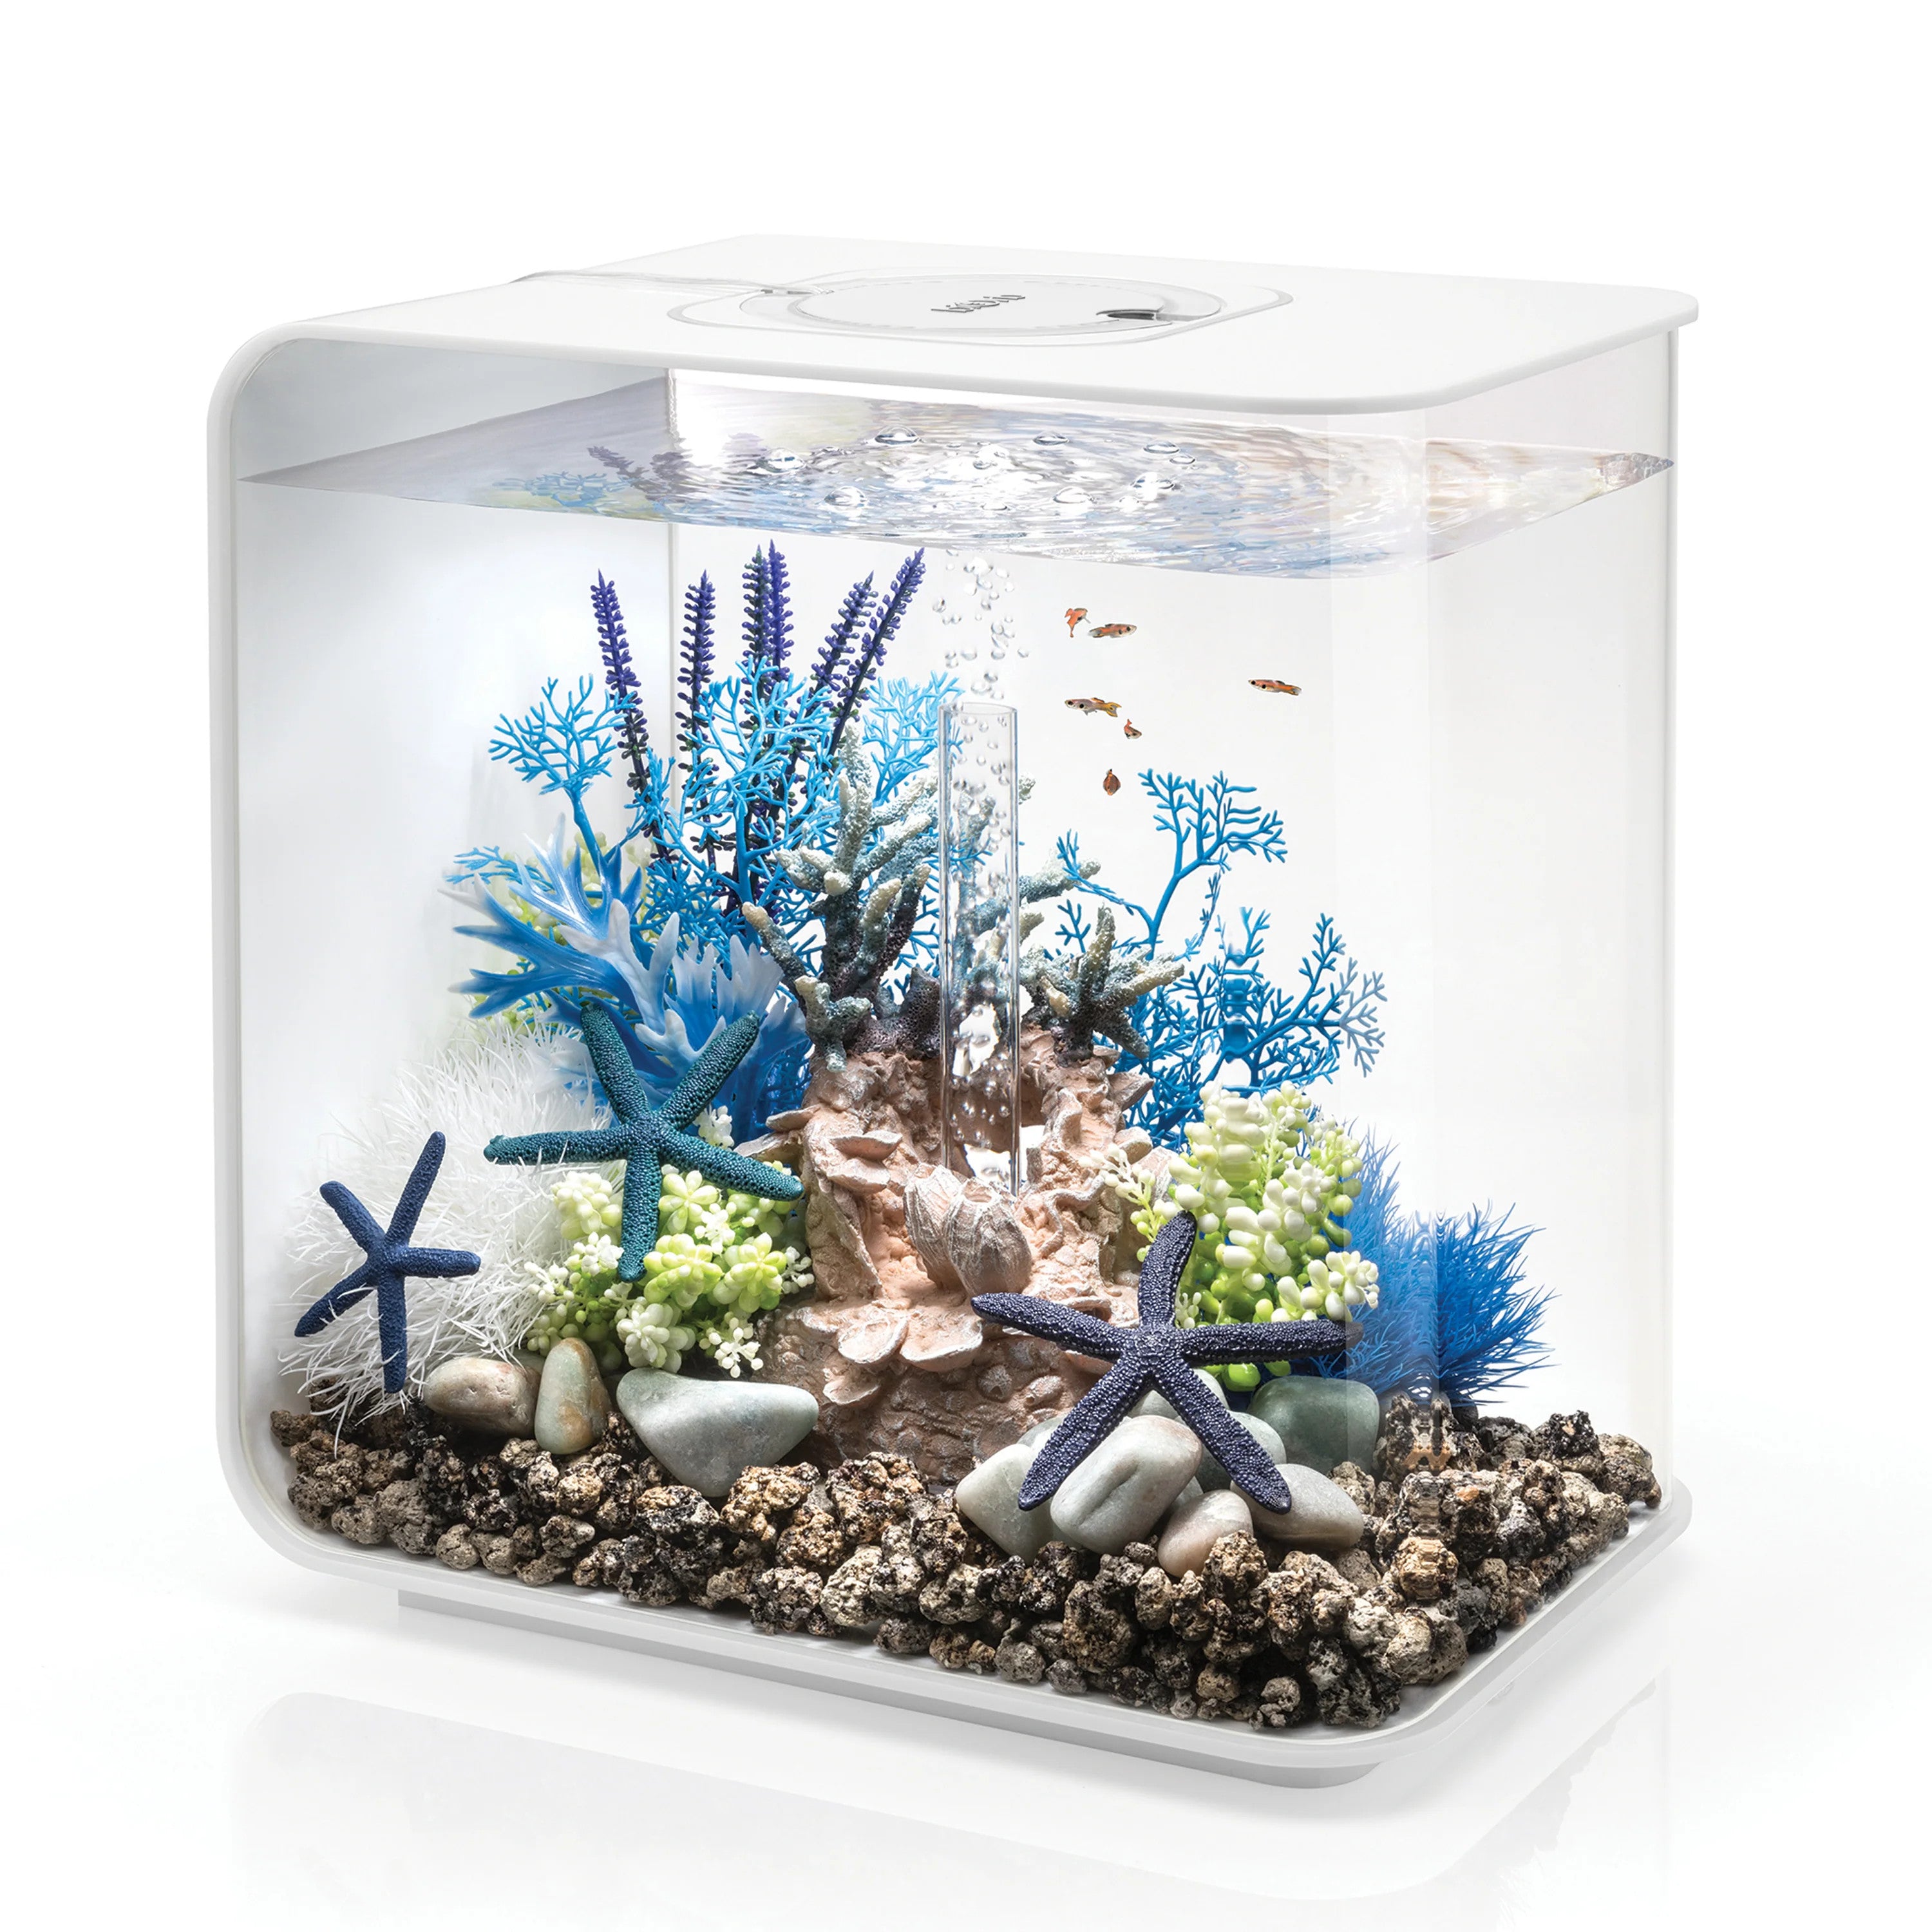 FLOW 30 Aquarium with Standard Light - 8 gallon | White